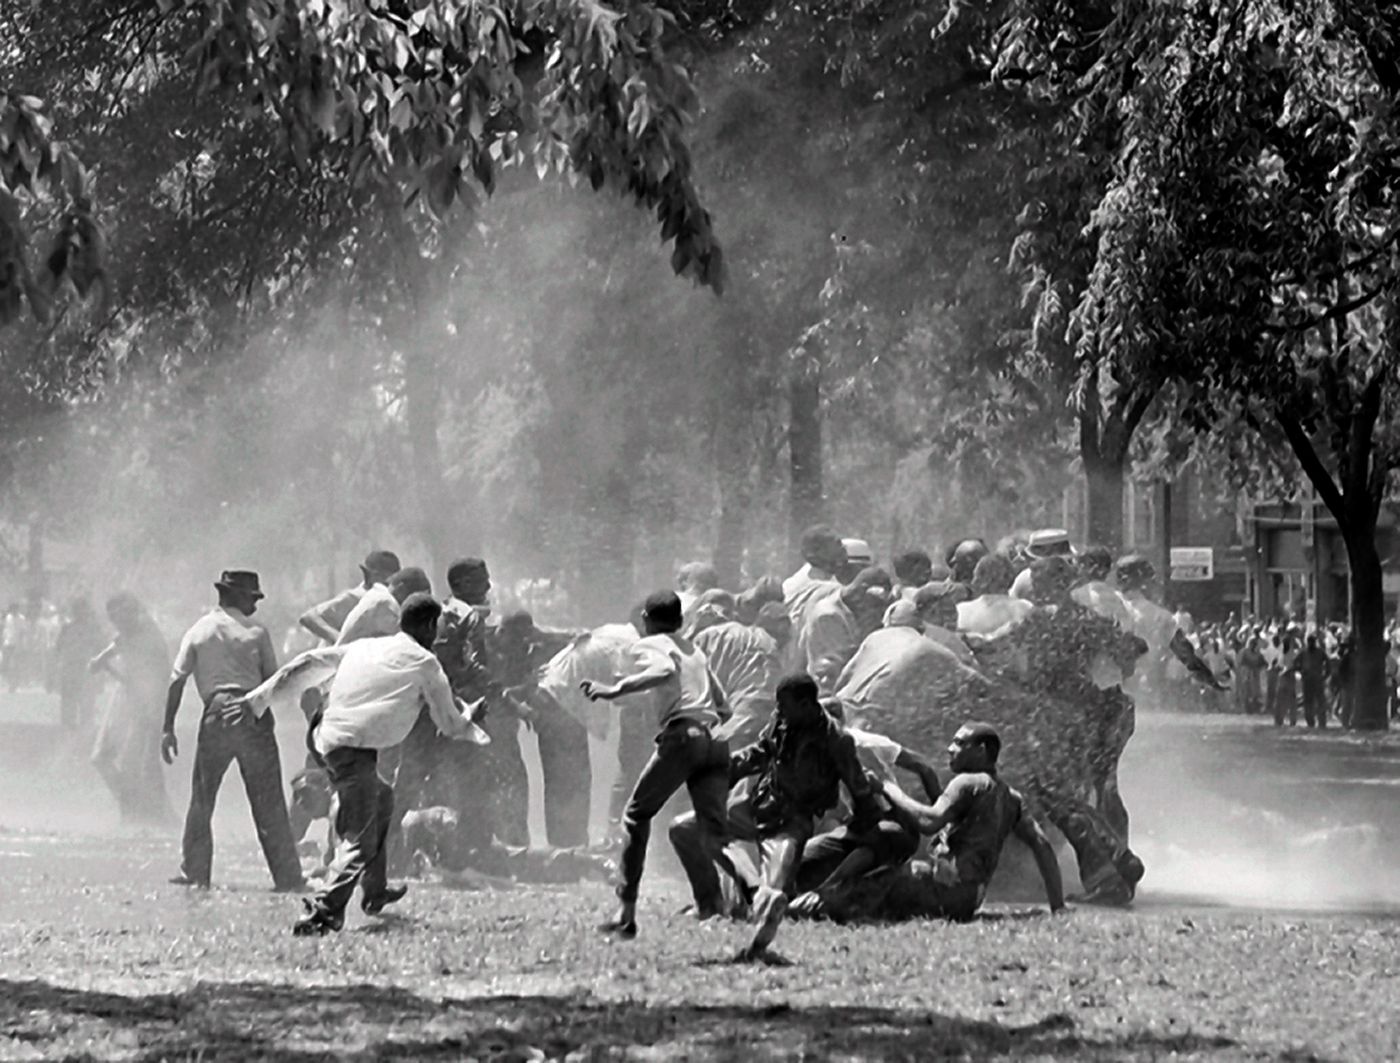 Birmingham Alabama Protest May 1963